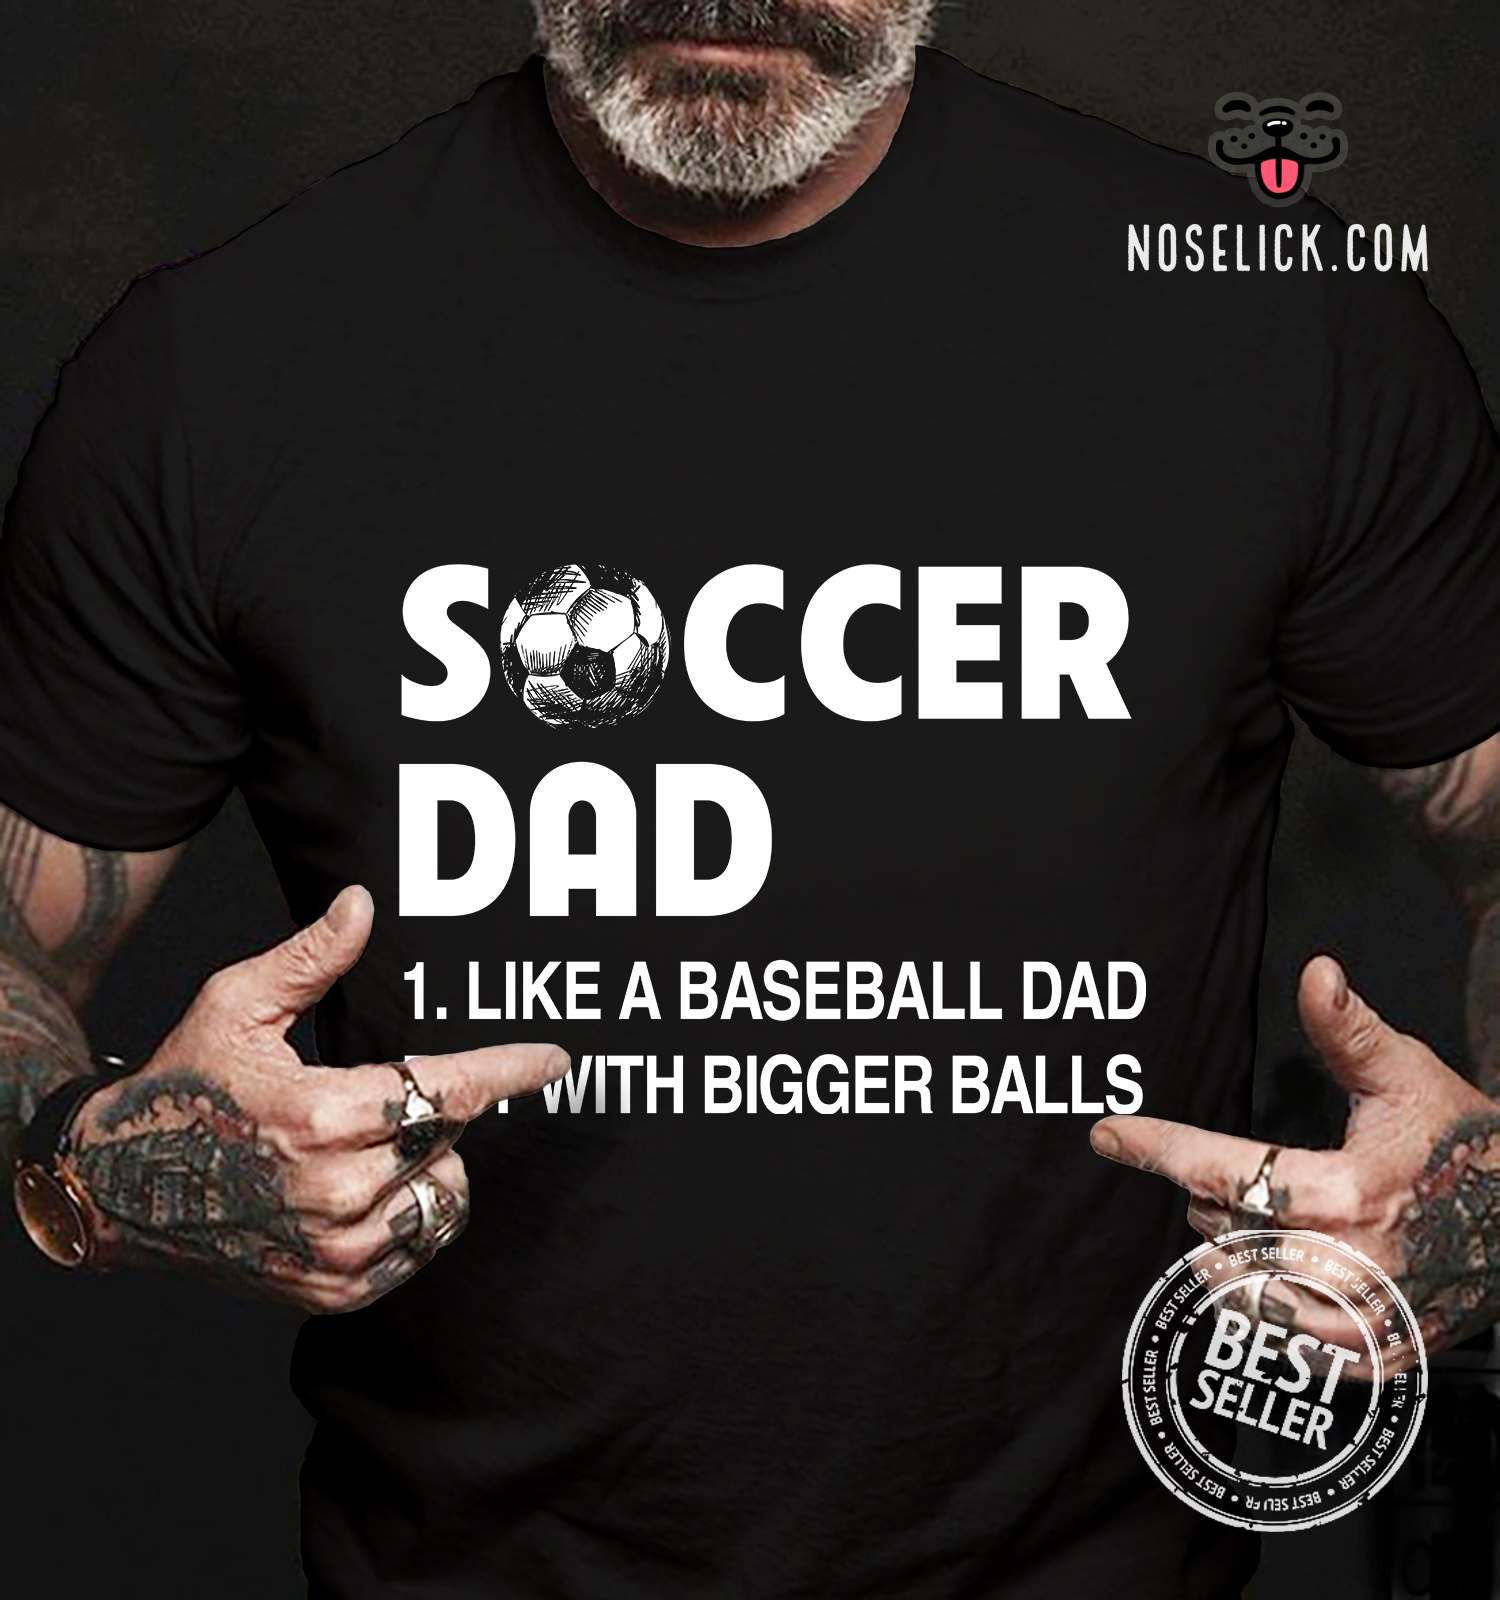 Soccer dad like a baseball dad but with bigger balls - Baseaball and soccer